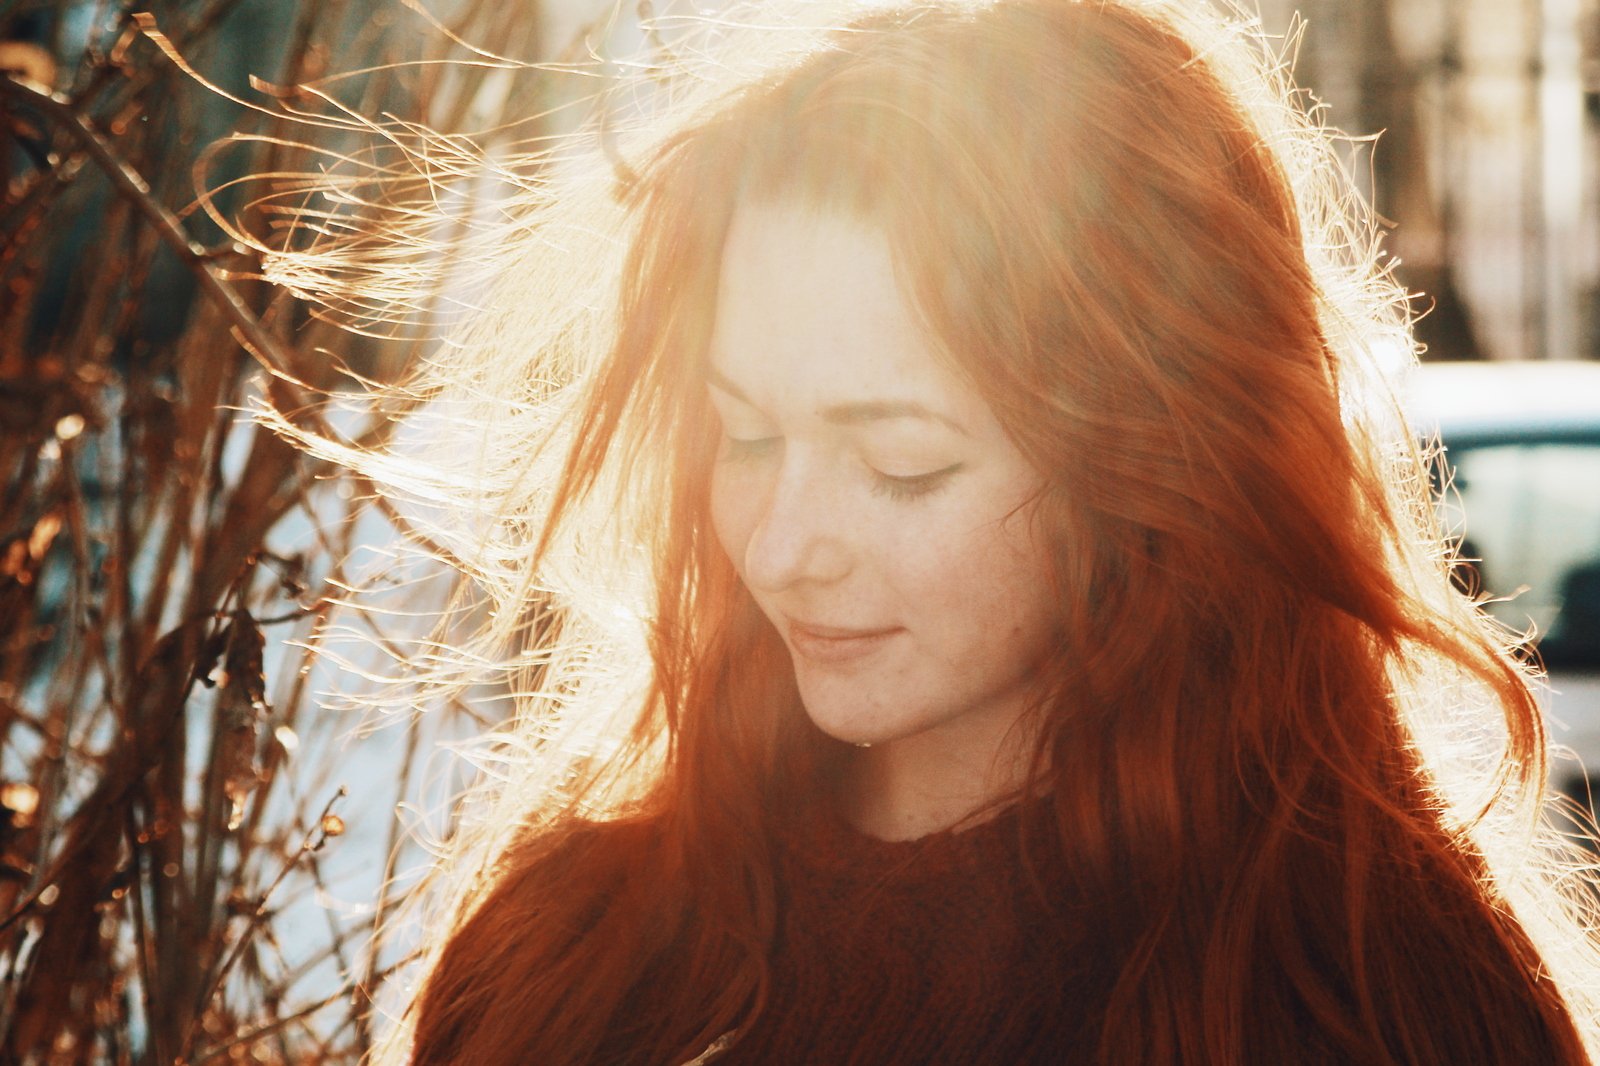 Рыжее солнце. Рыжая девушка на солнце. Фотограф Рыжик.